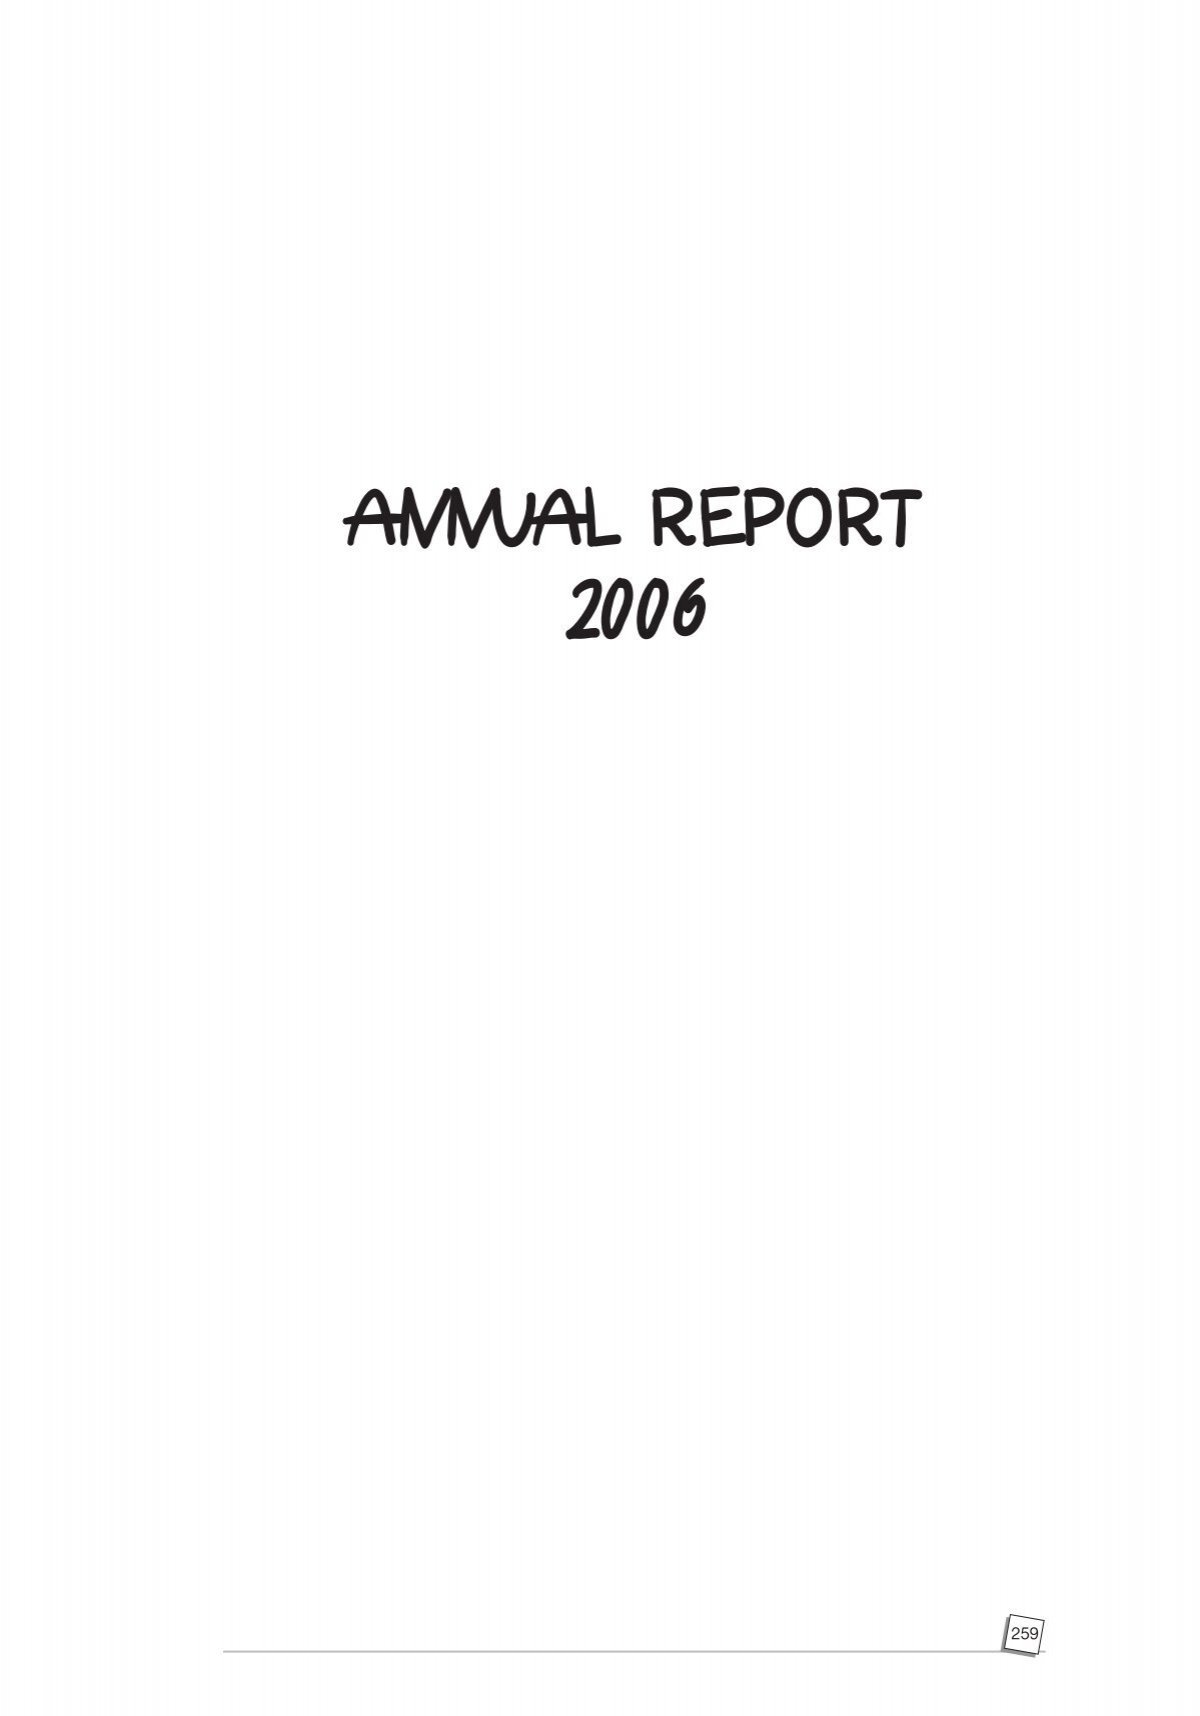 Annual Report English 06